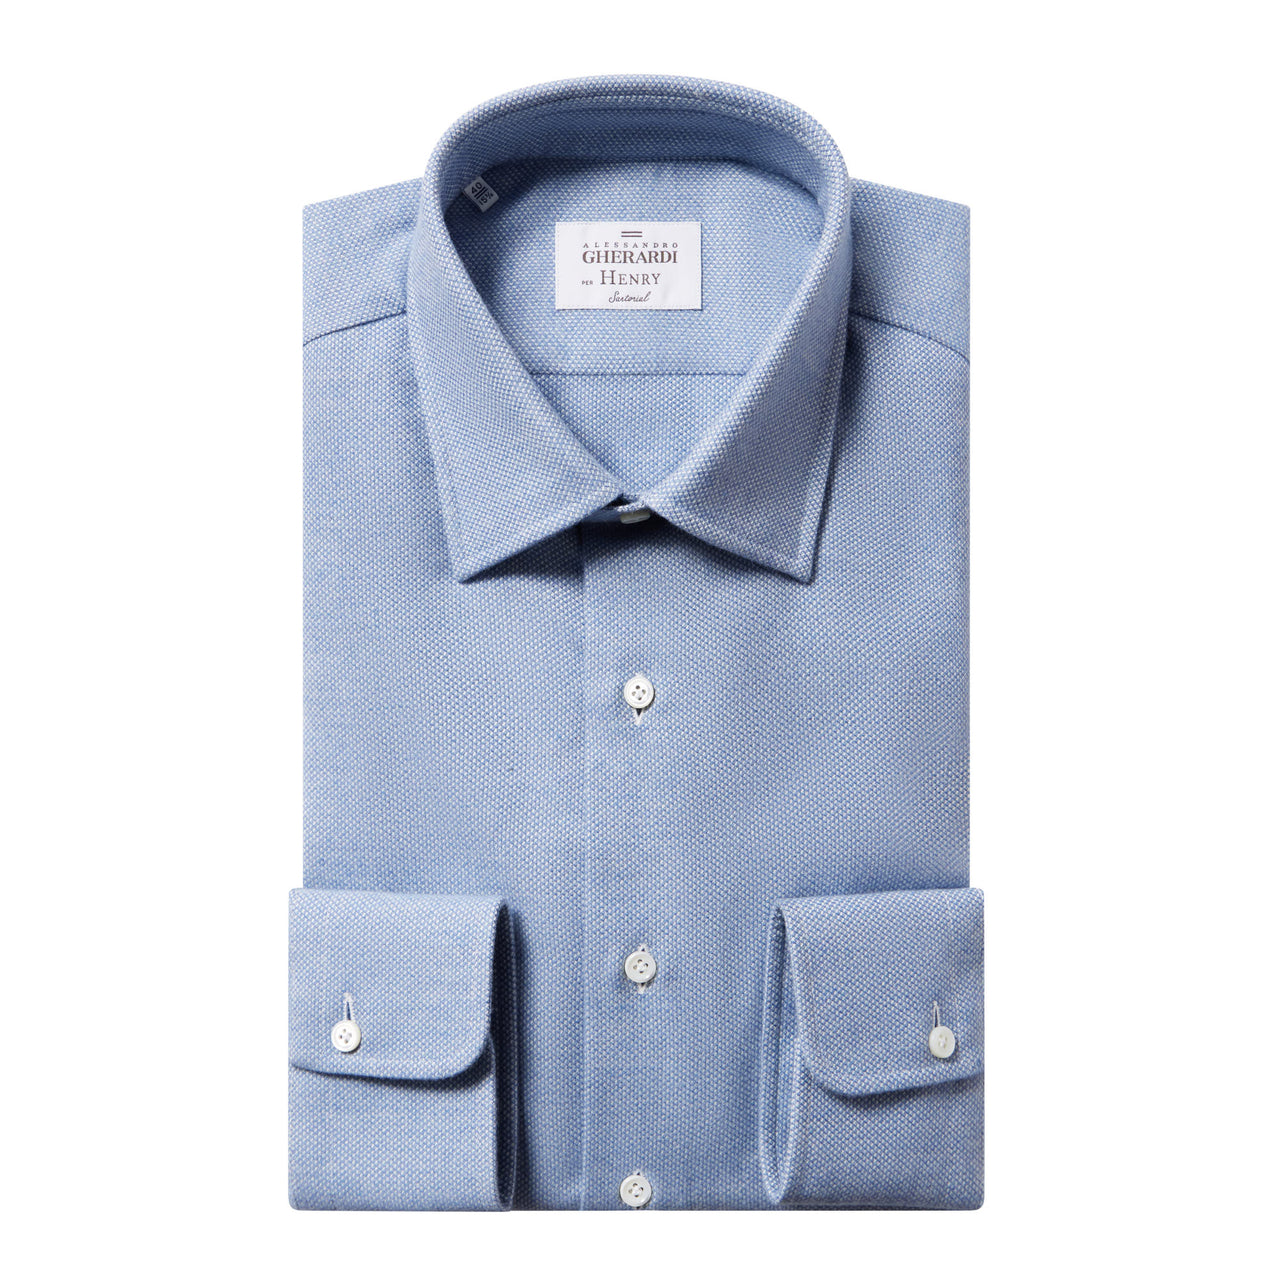 HENRY SARTORIAL X GHERARDI Flannel Classic Shirt Single Cuff Classic Fit BLUE